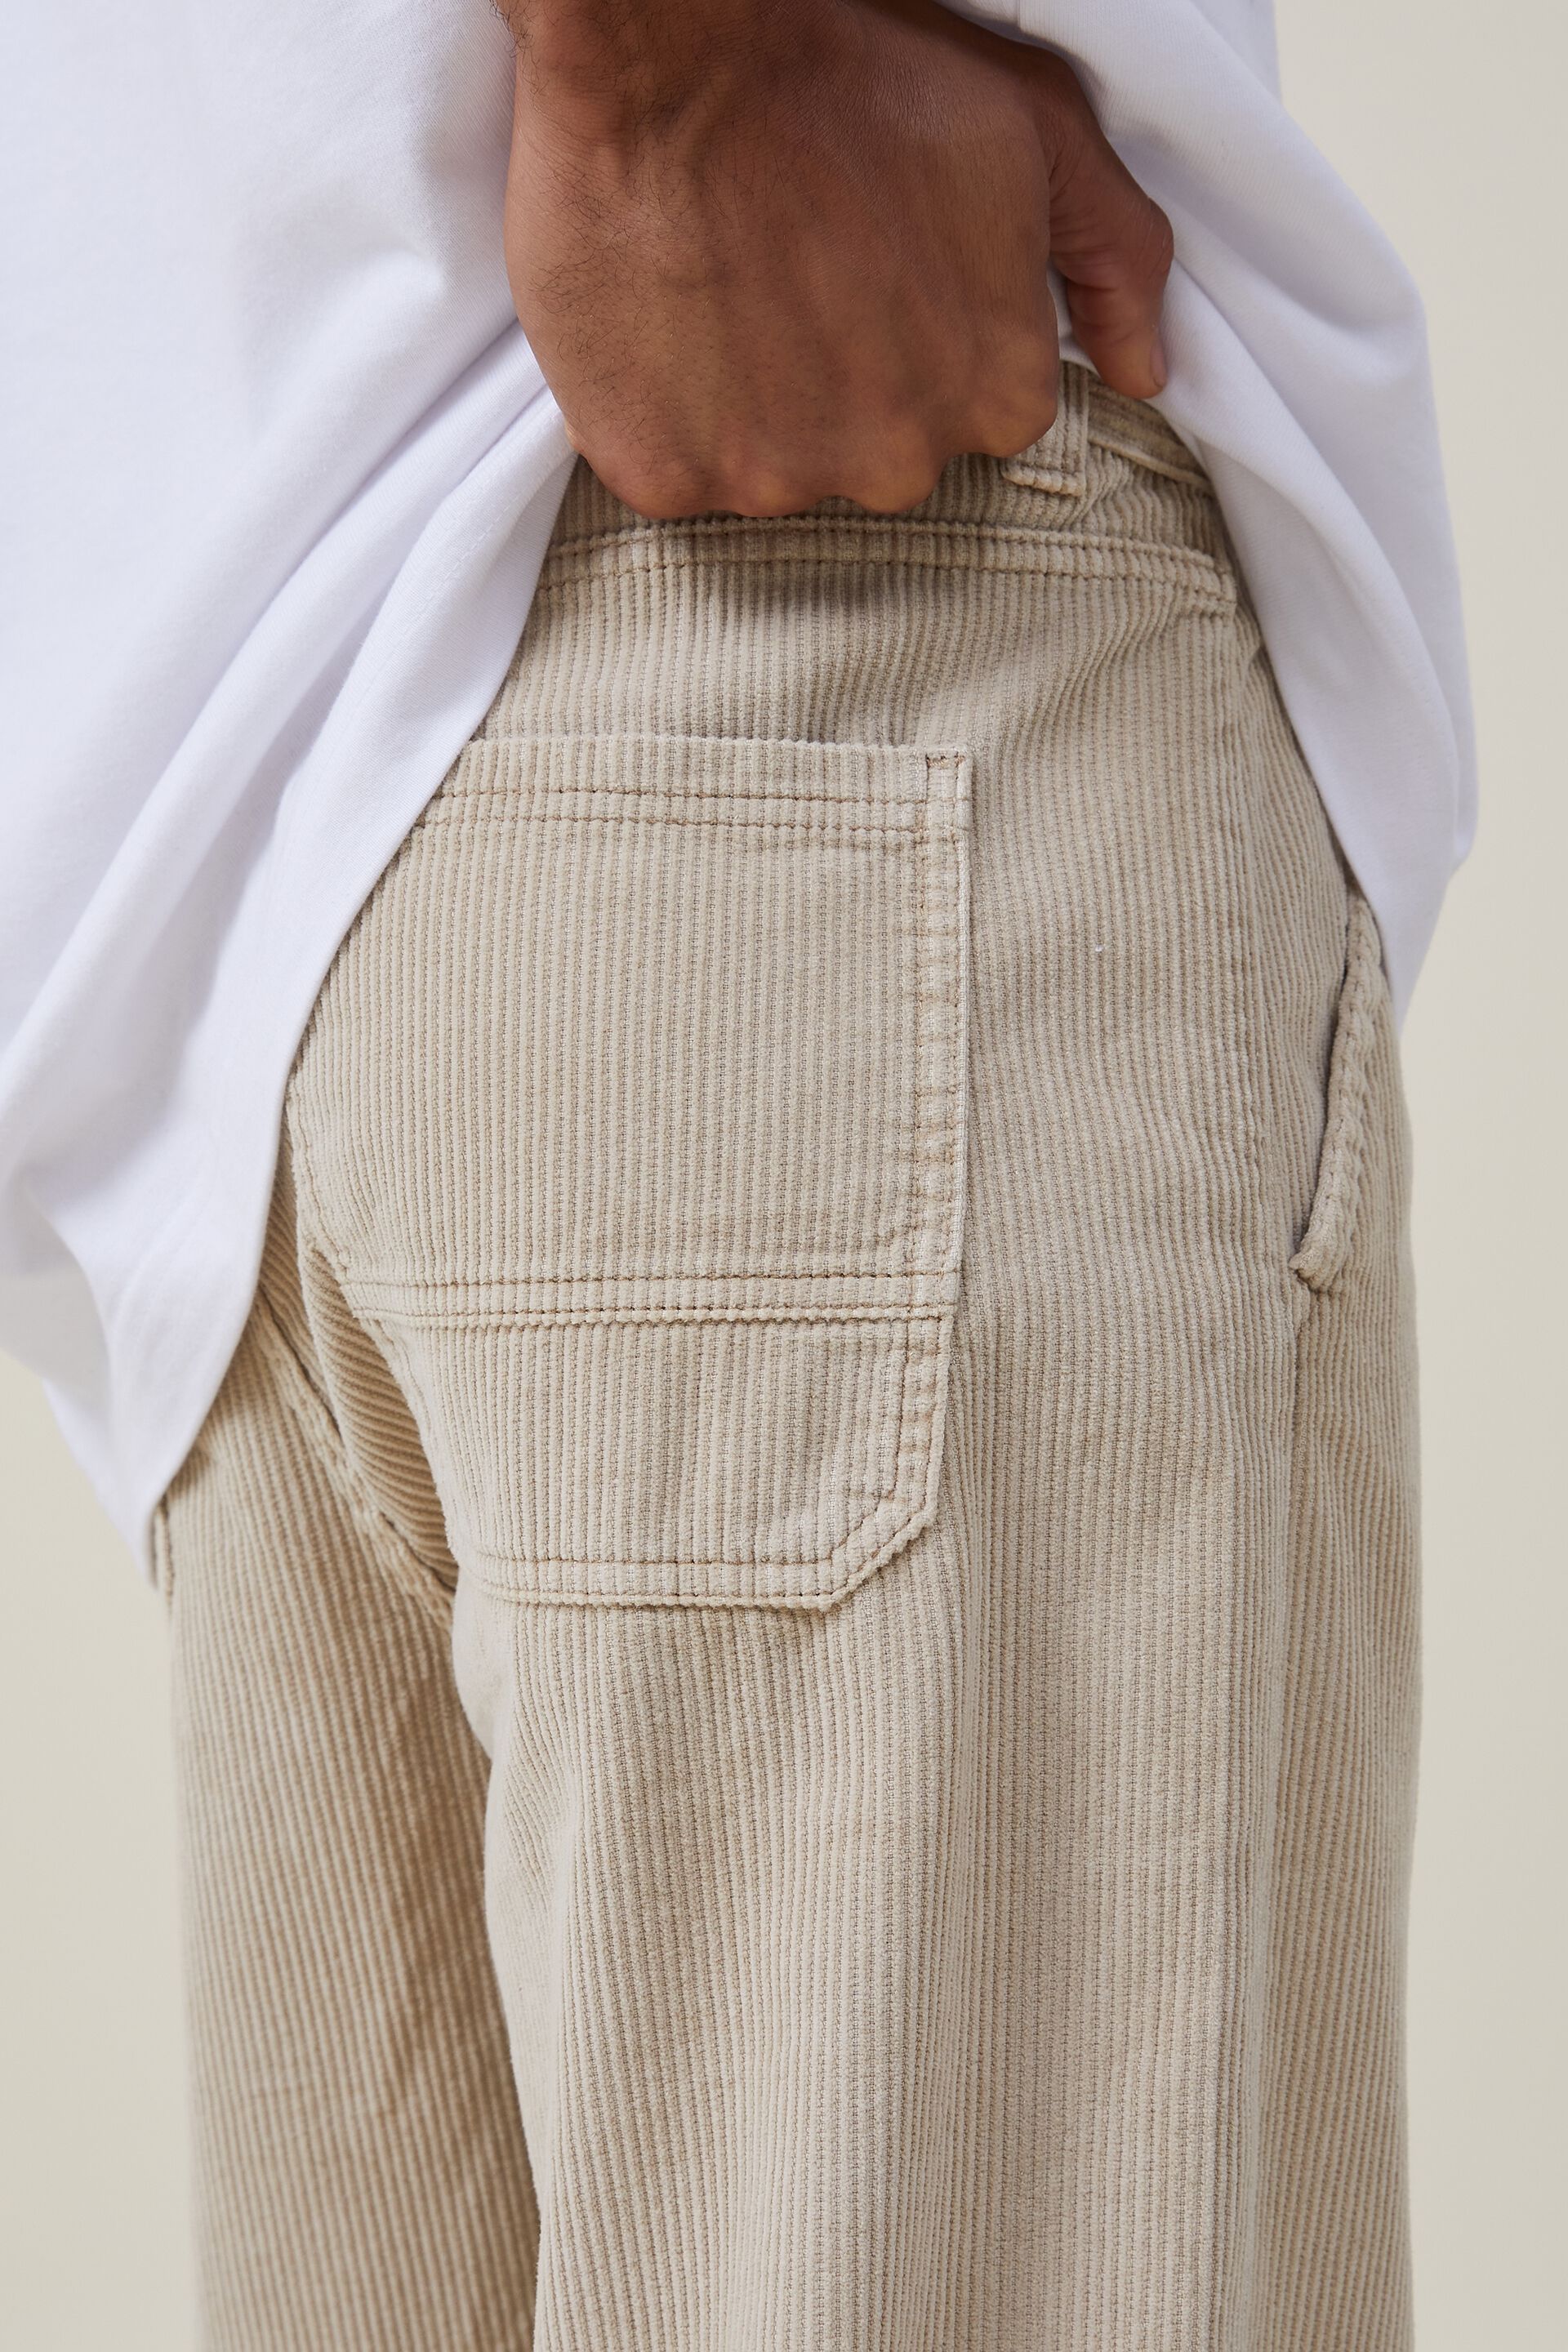 MANCREW Formal Pants for Men Regular fit – Formal Trousers for Men – DMS  ENTERPRISES